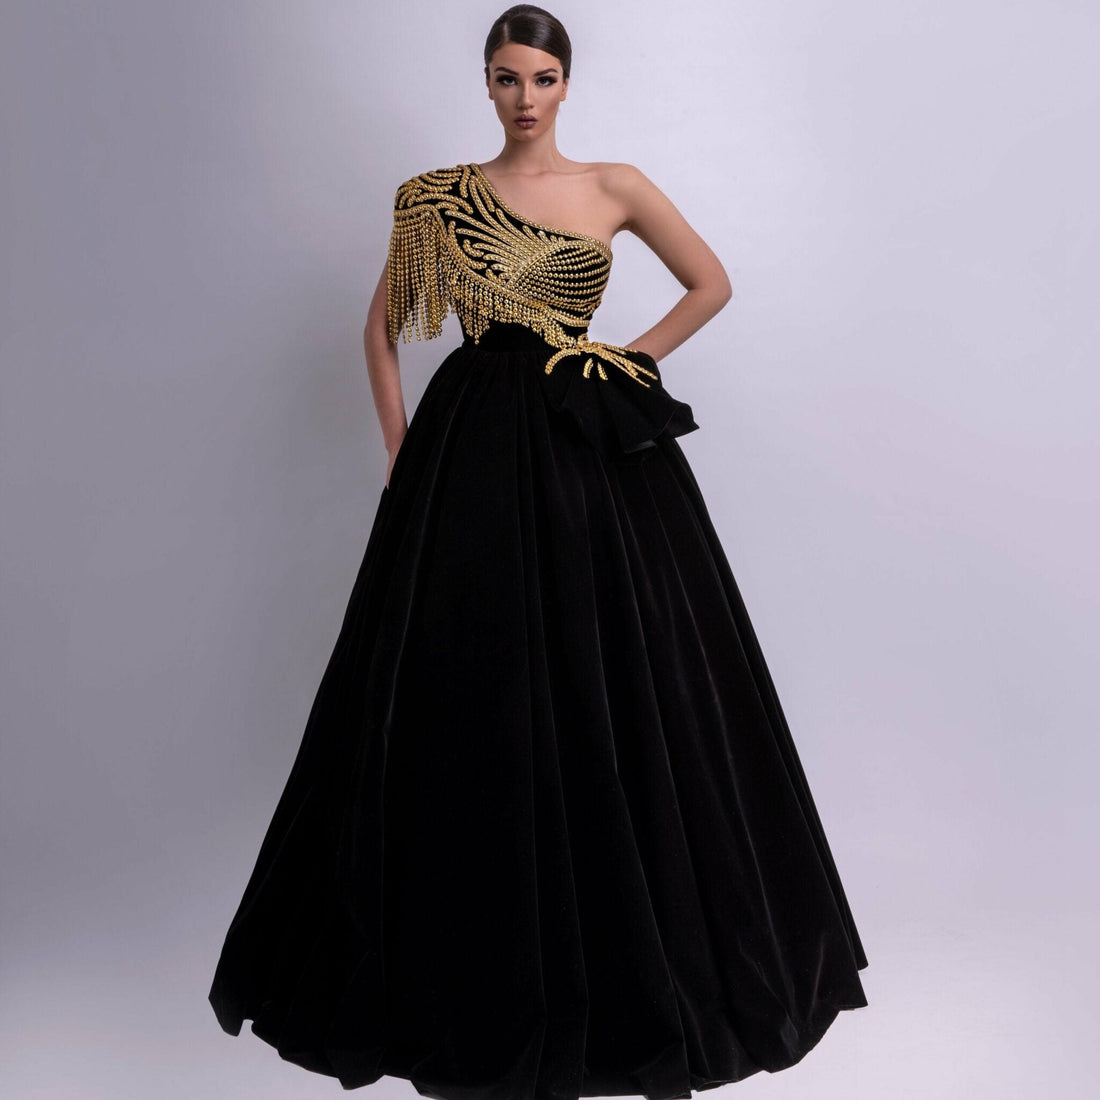 Majestic Black and Gold One - Shoulder Ball Gown - KUJTA & MERI - KUJTA & MERI